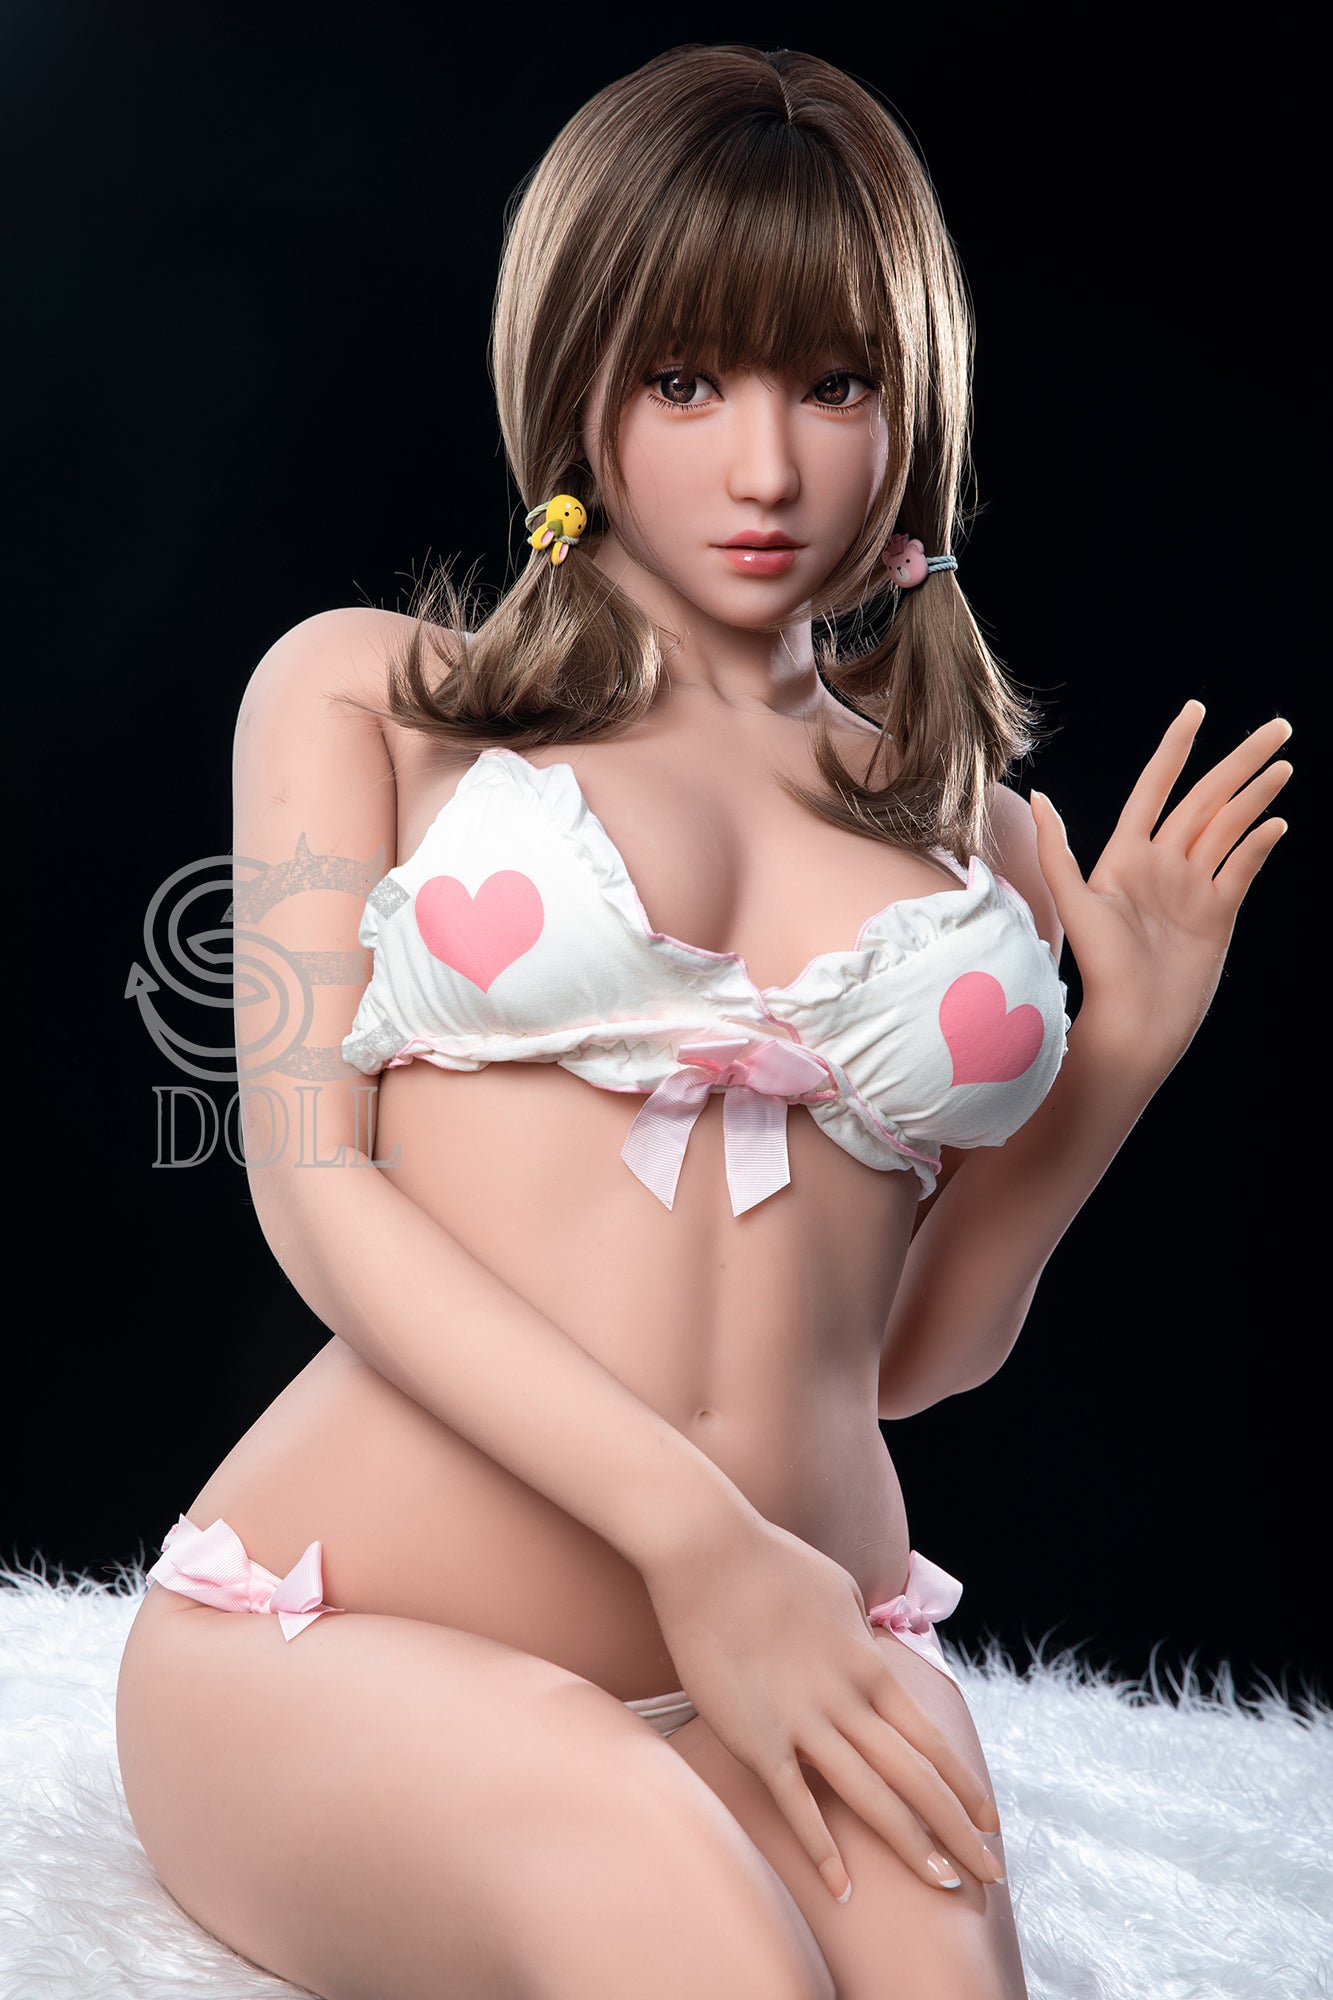 SEDOLL 163 cm E TPE - Midori | Buy Sex Dolls at DOLLS ACTUALLY